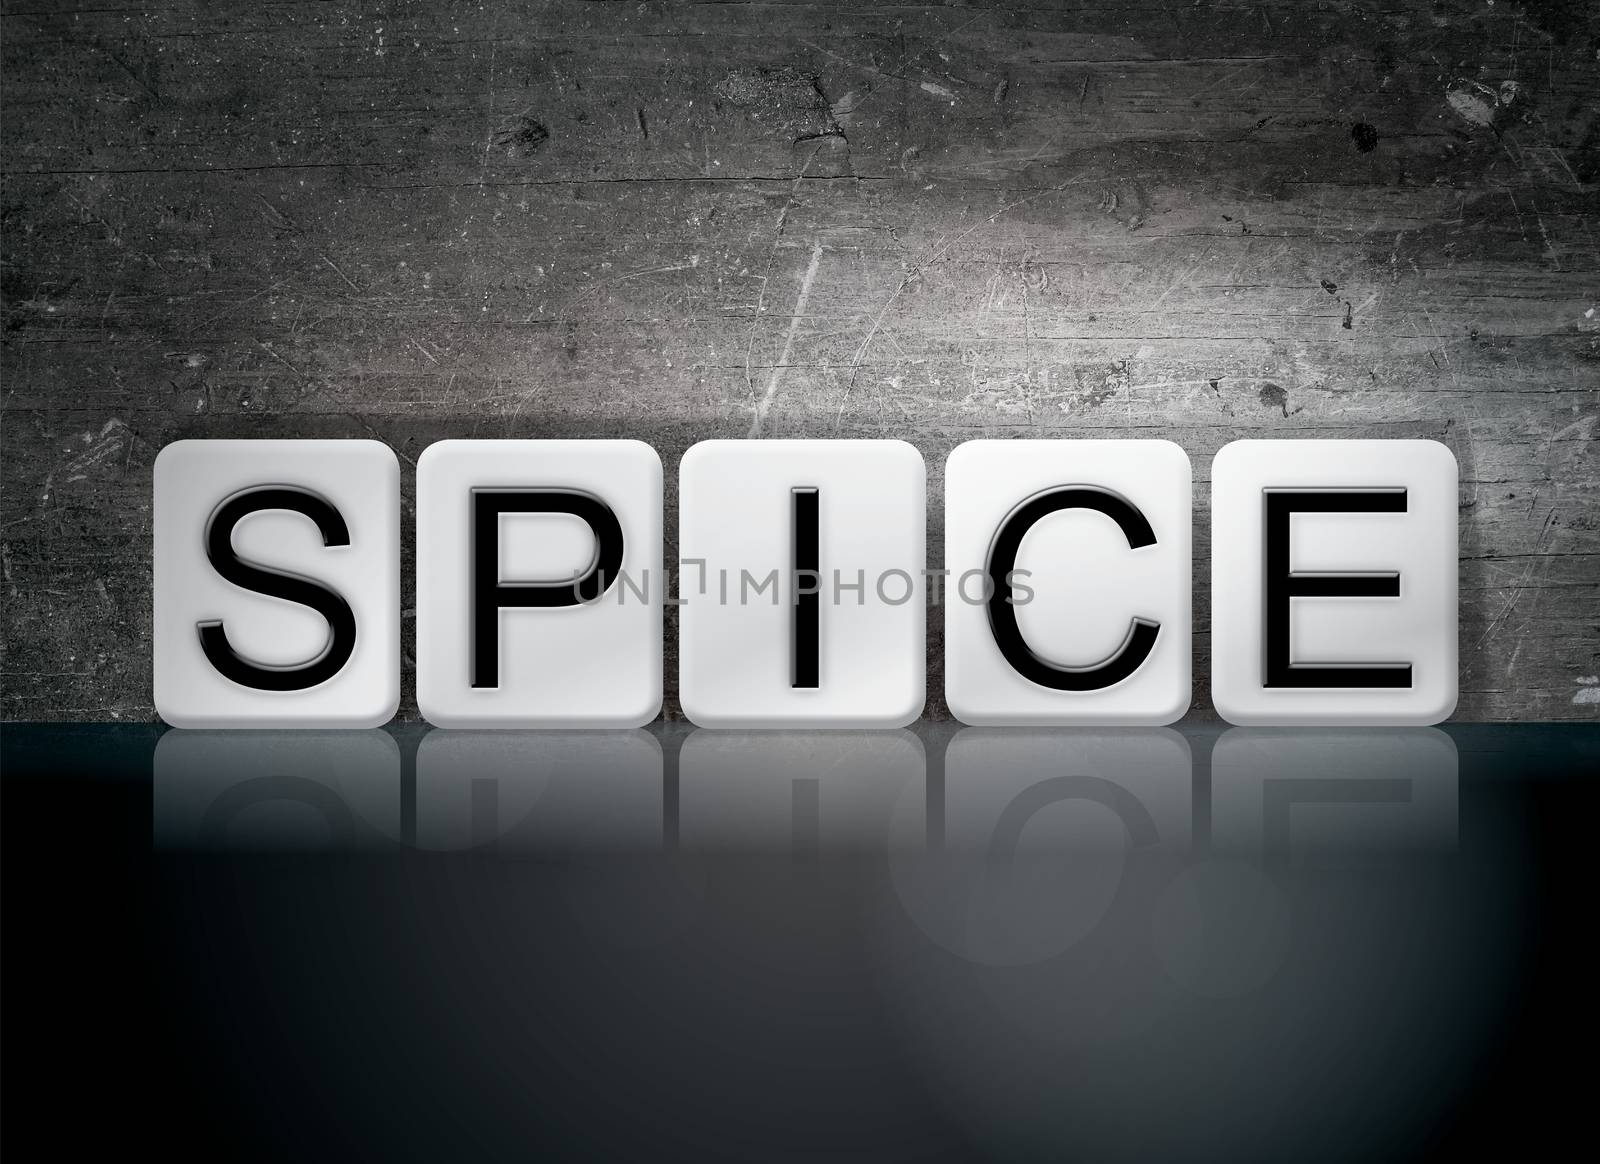 The word "Spice" written in white tiles against a dark vintage grunge background.